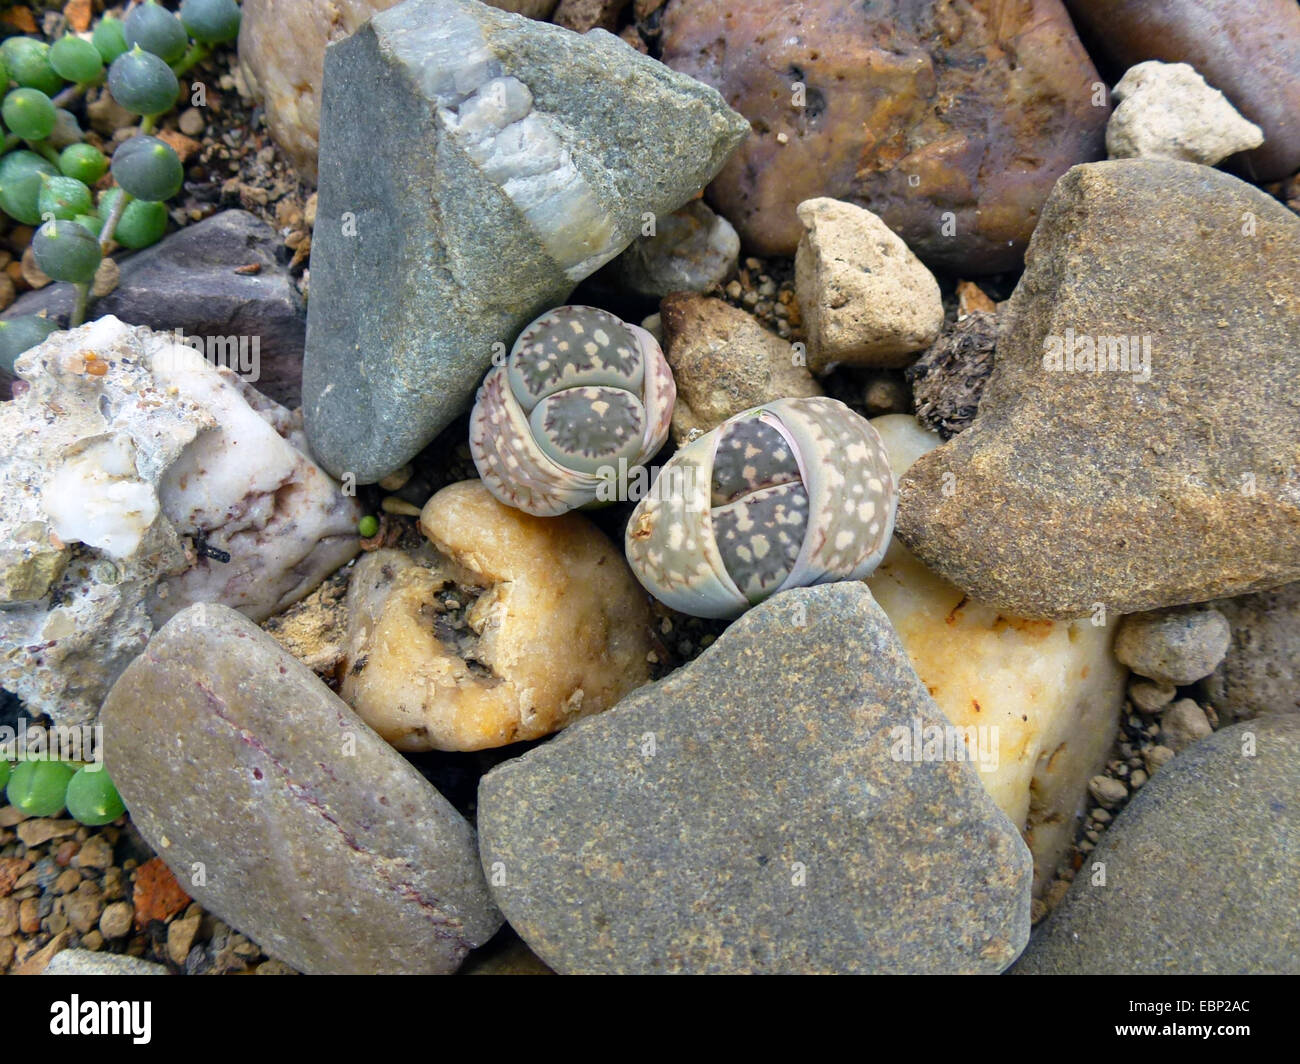 stone plant (Lithops spec.), living stones among real stones Stock Photo